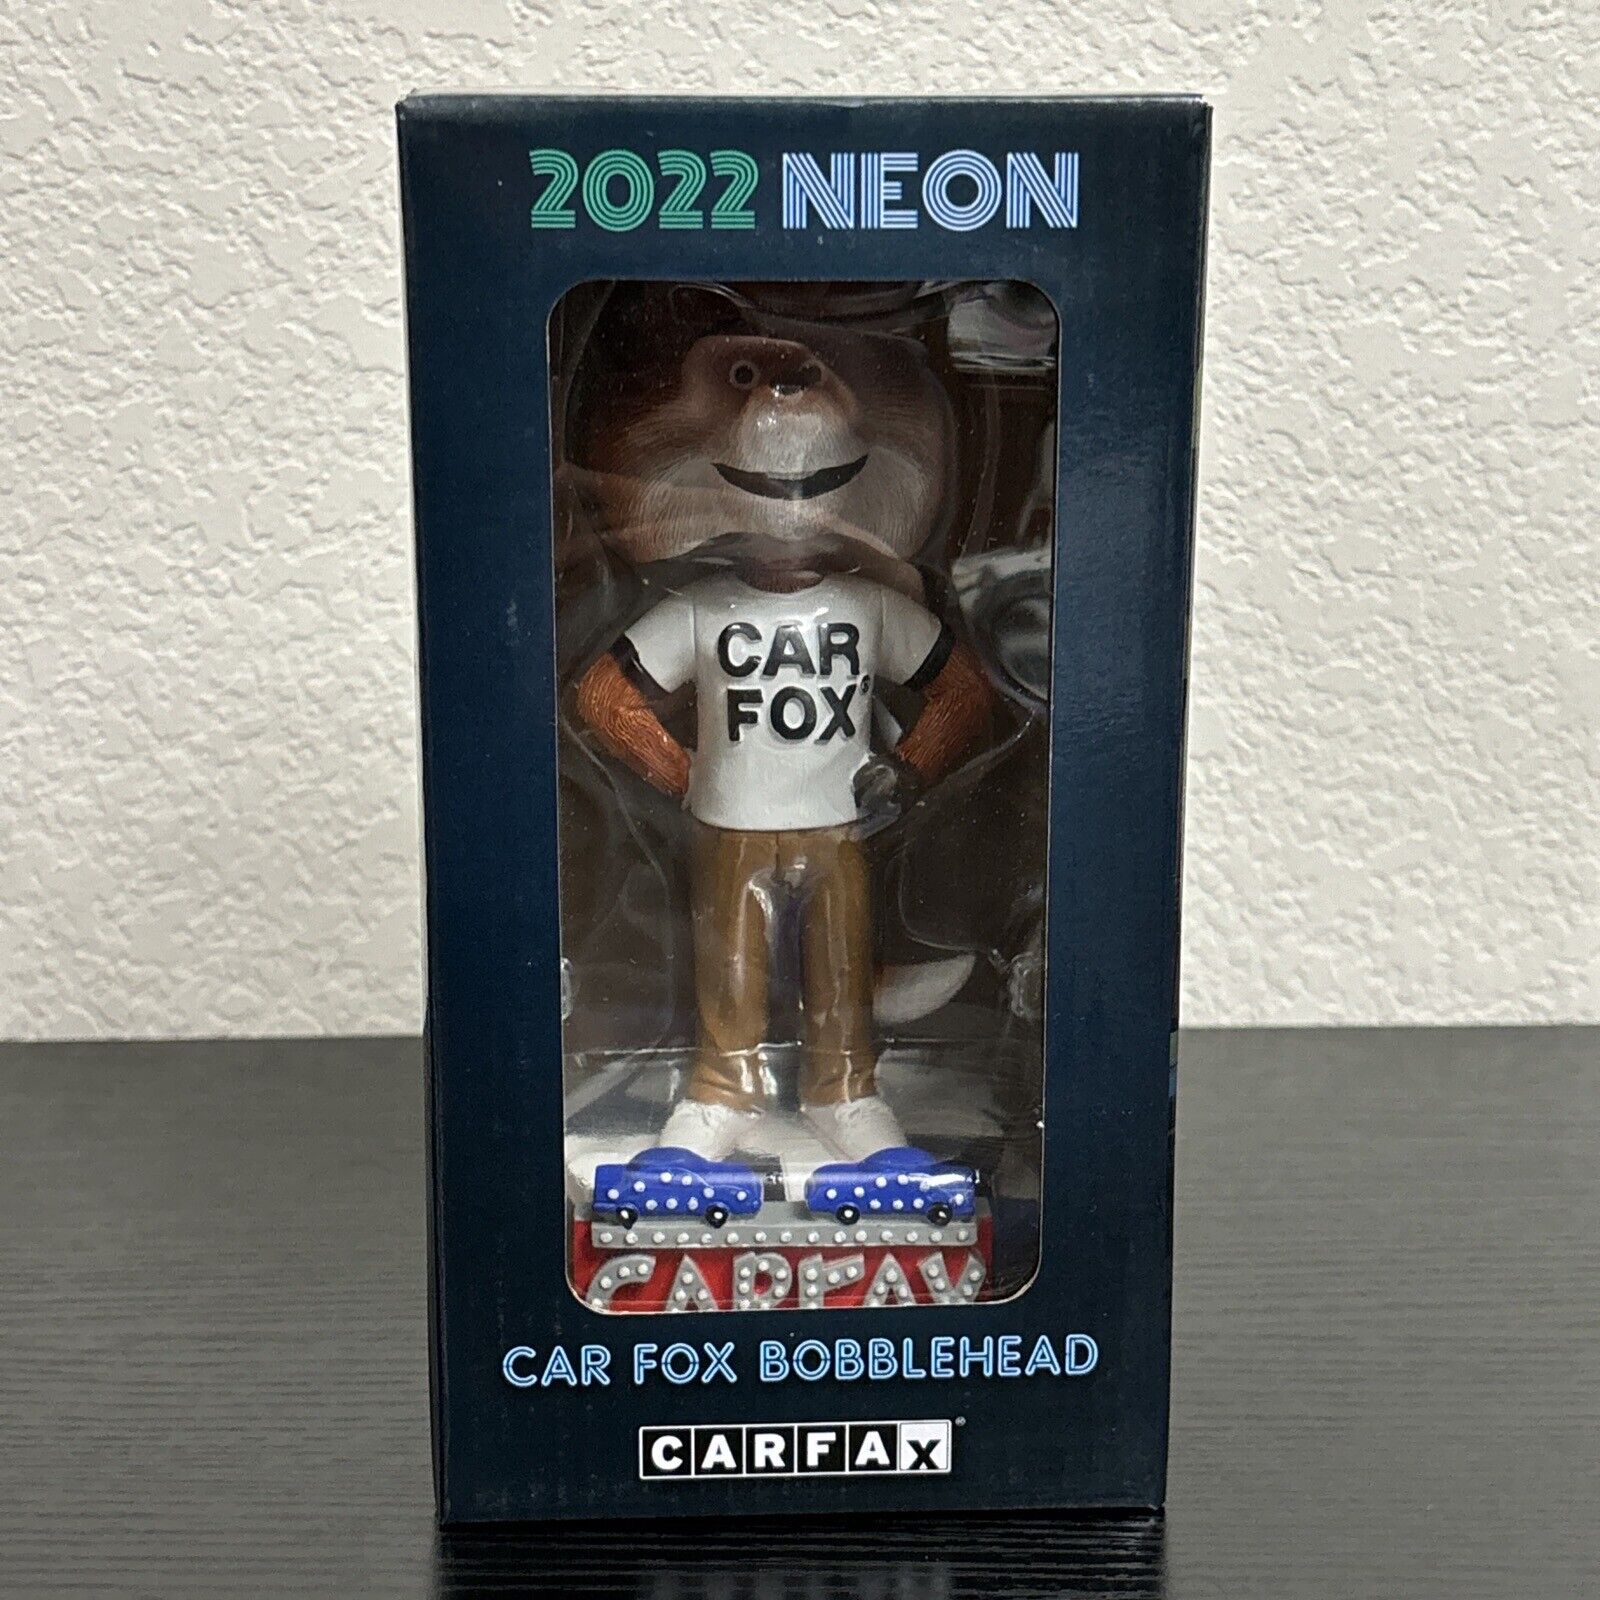 CARFAX Car Fox Bobblehead 2022 Neon Limited Edition - New in Box